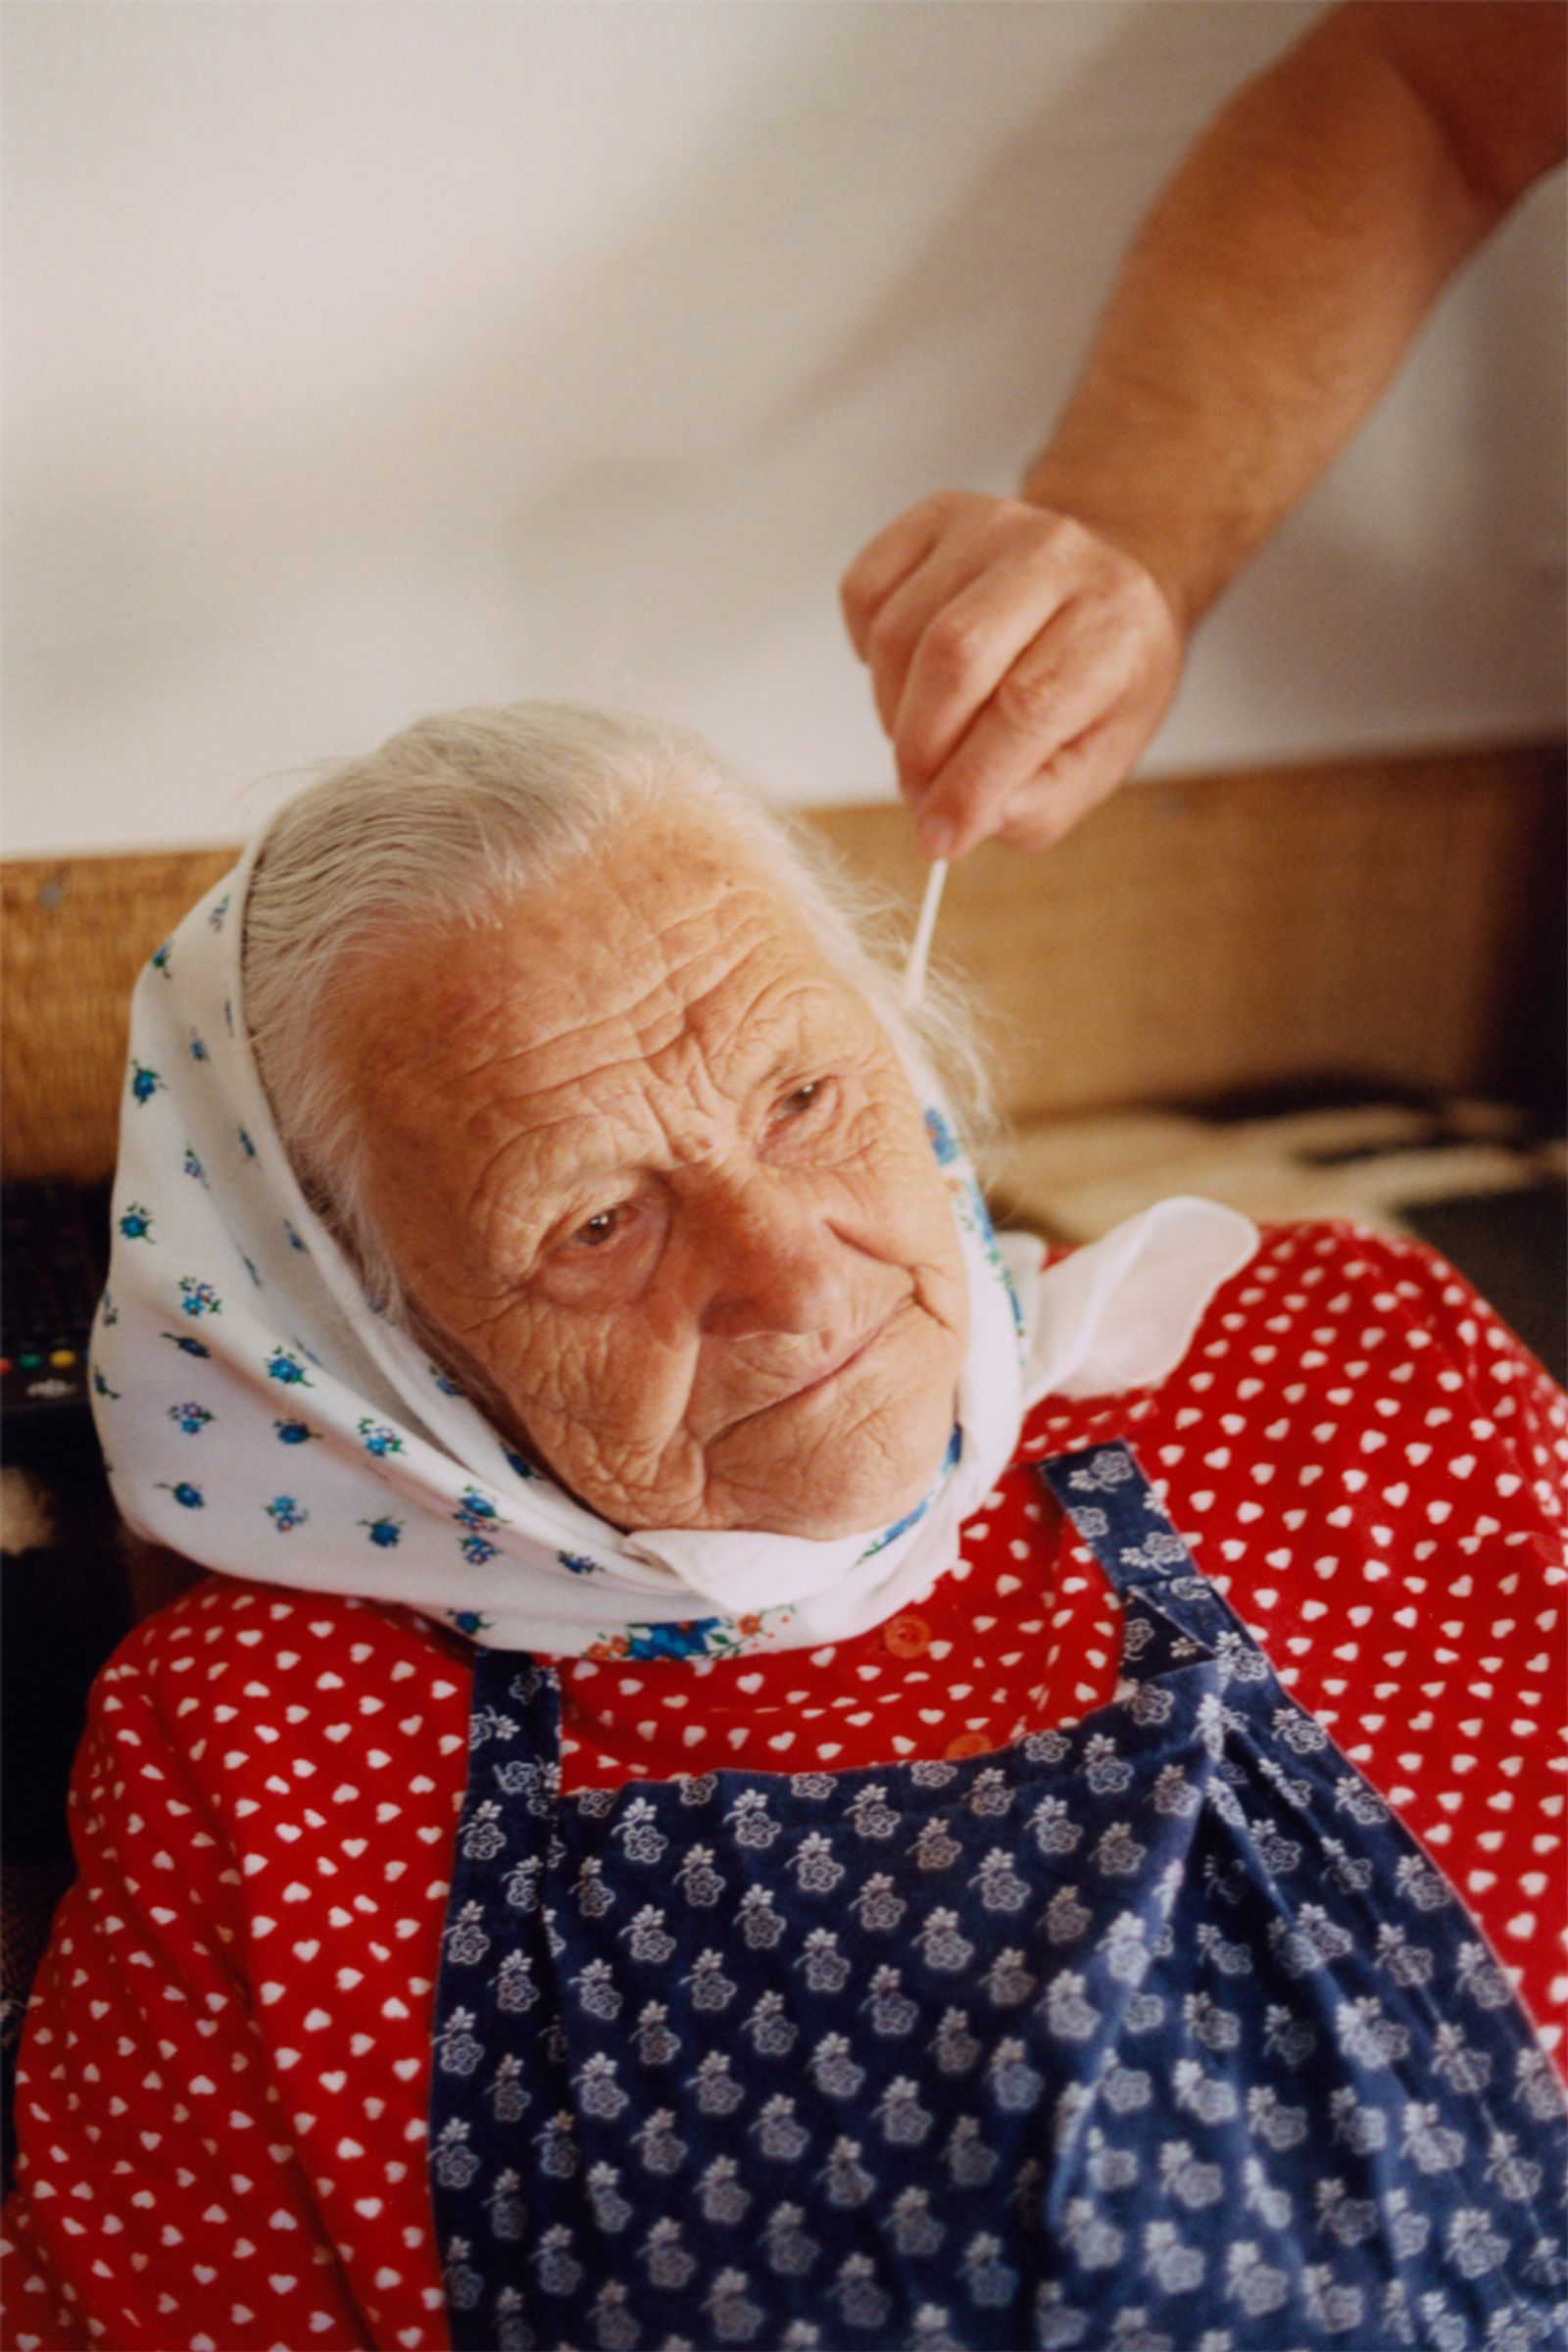 © Tereza Červeňová - Tending to Grandmothers' ears. [Northern Slovakia, August 2020]